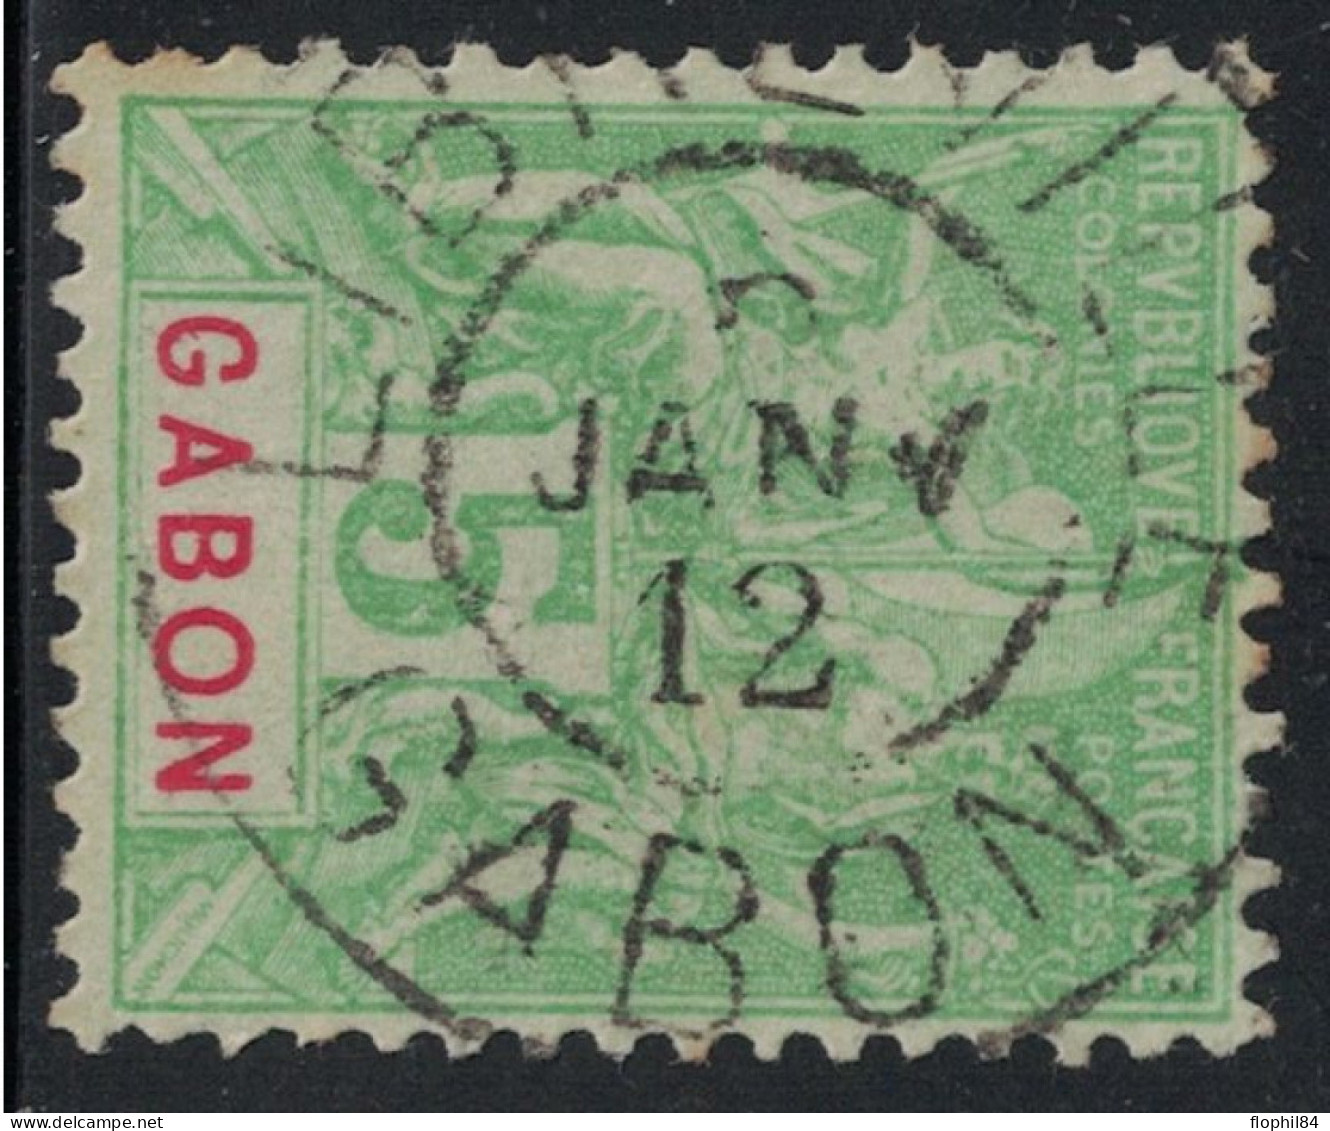 GABON - TYPE GROUPE - N°19 - CACHET A DATE - LIBREVILLE GABON - LE 2-1-1912 . - Gebraucht